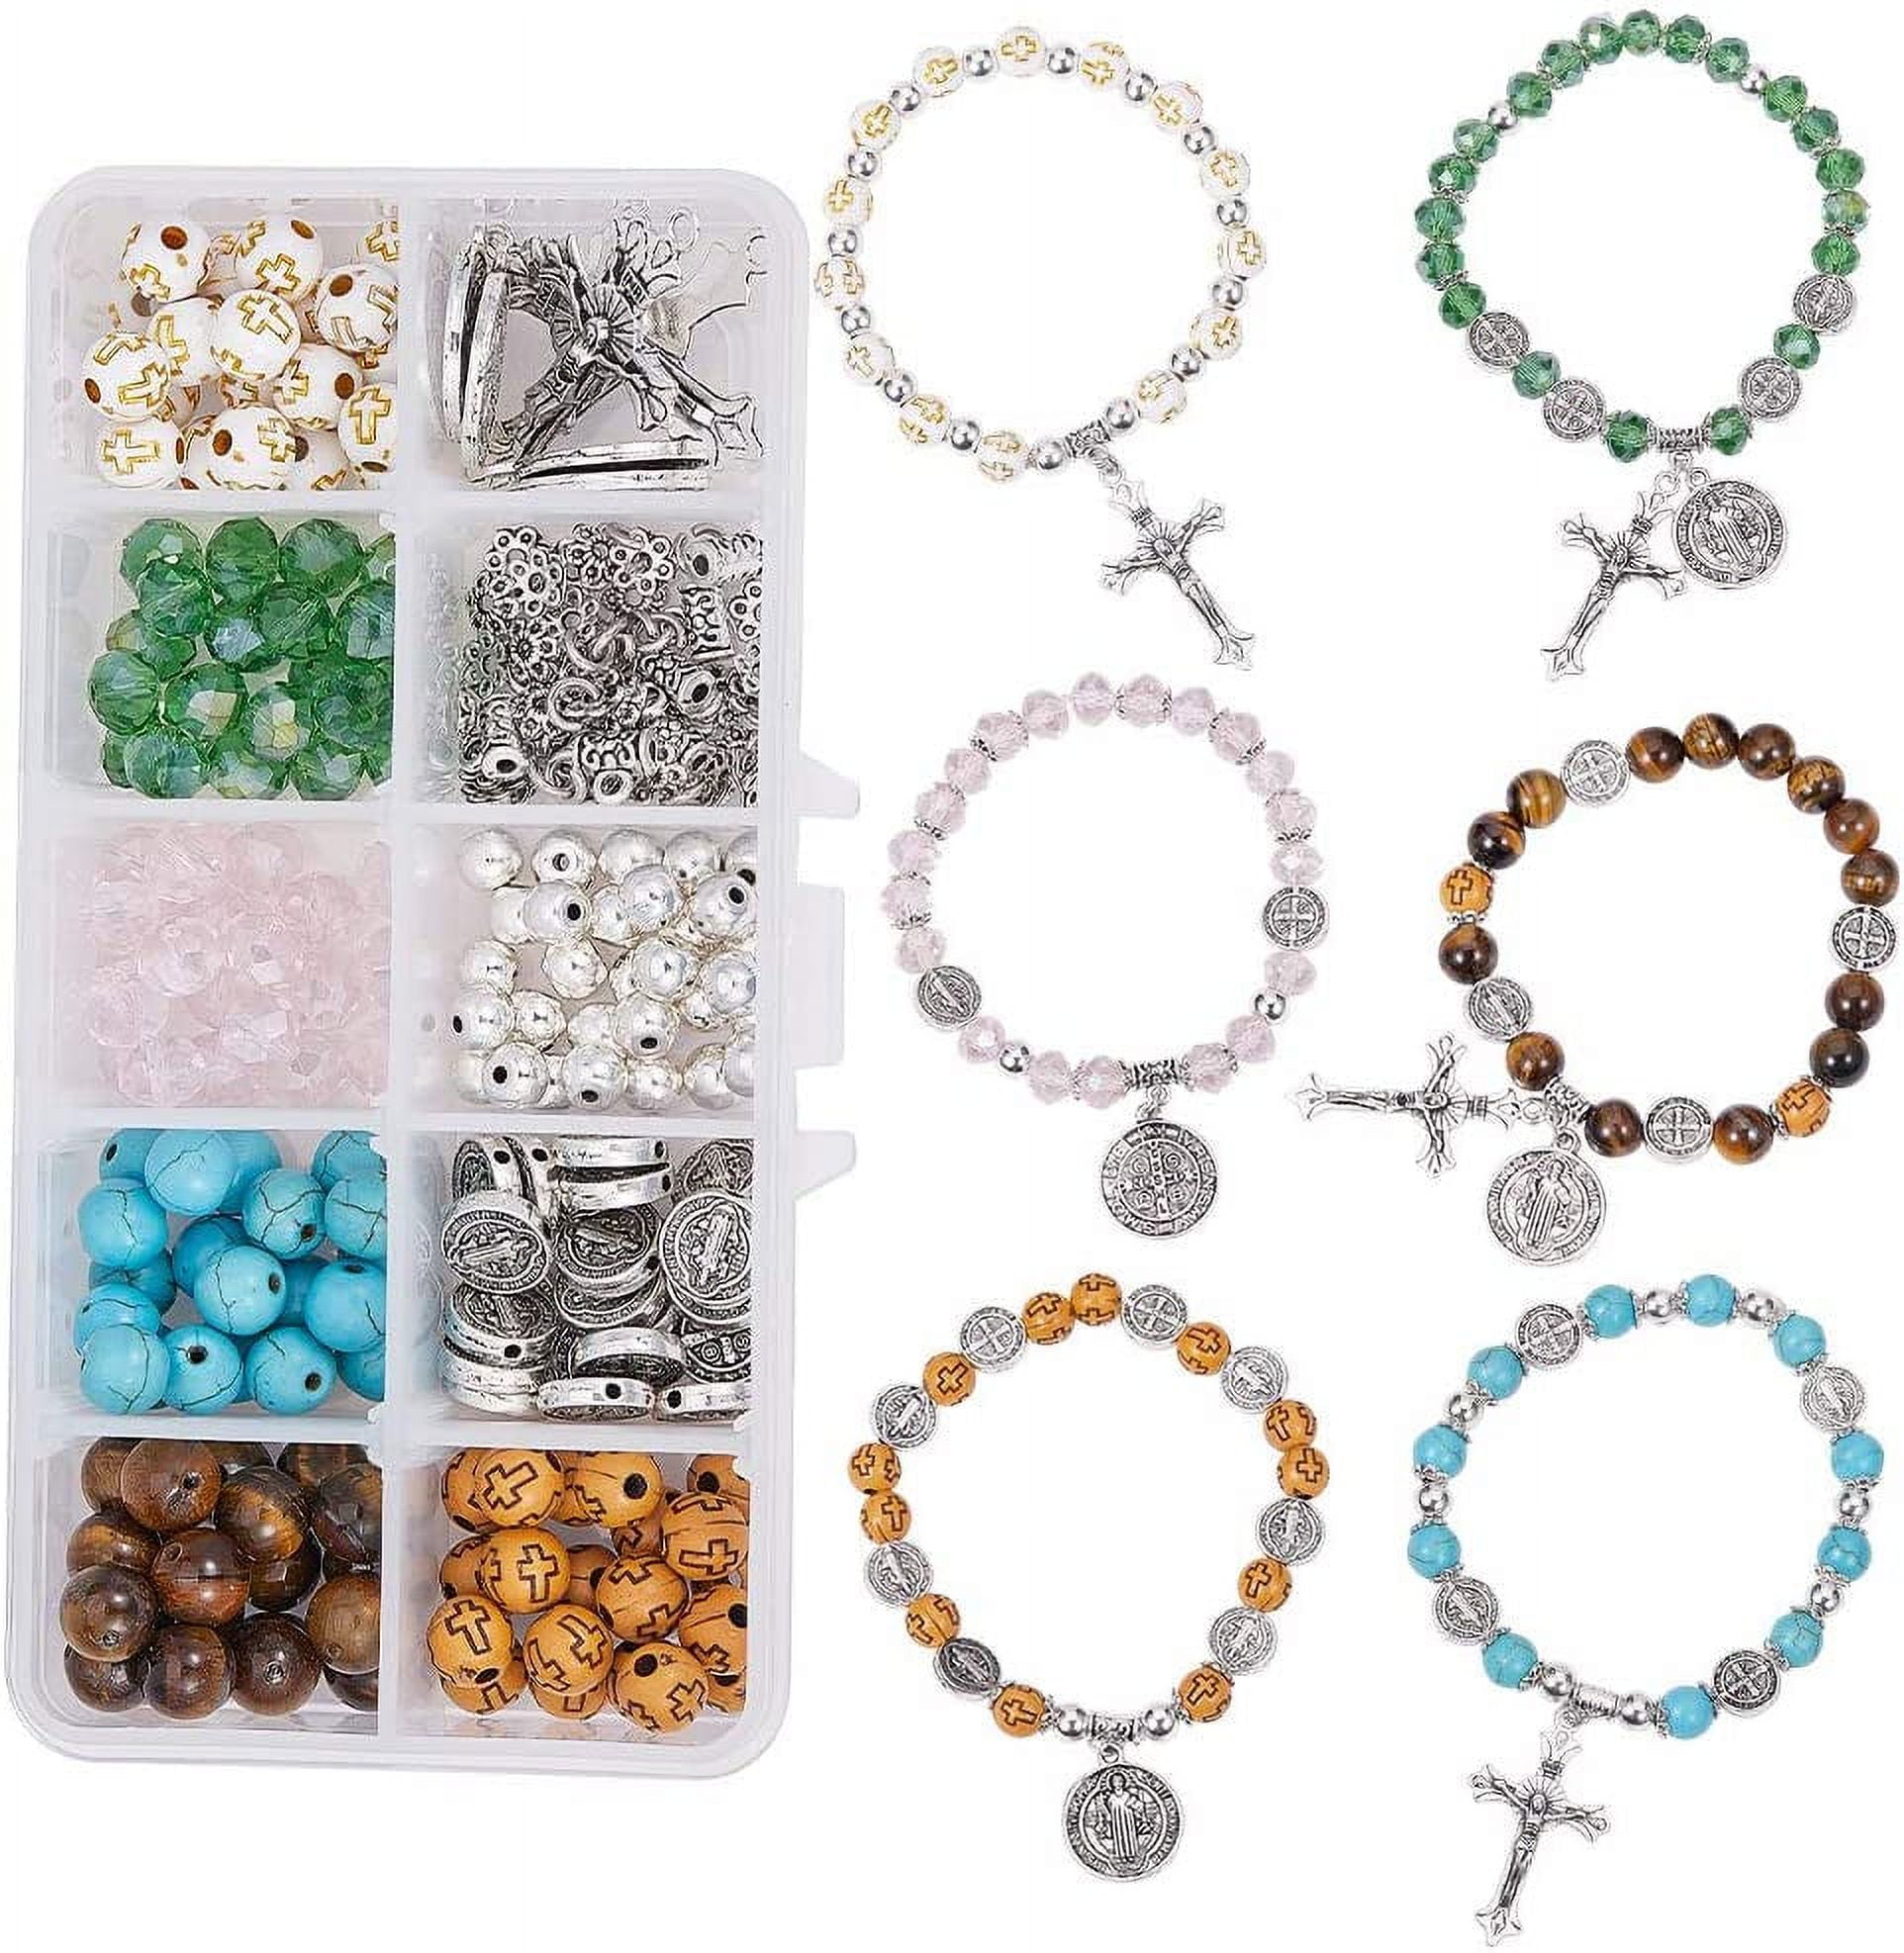  SEWACC 20pcs Beaded Jewelry Beads Bracelet Making